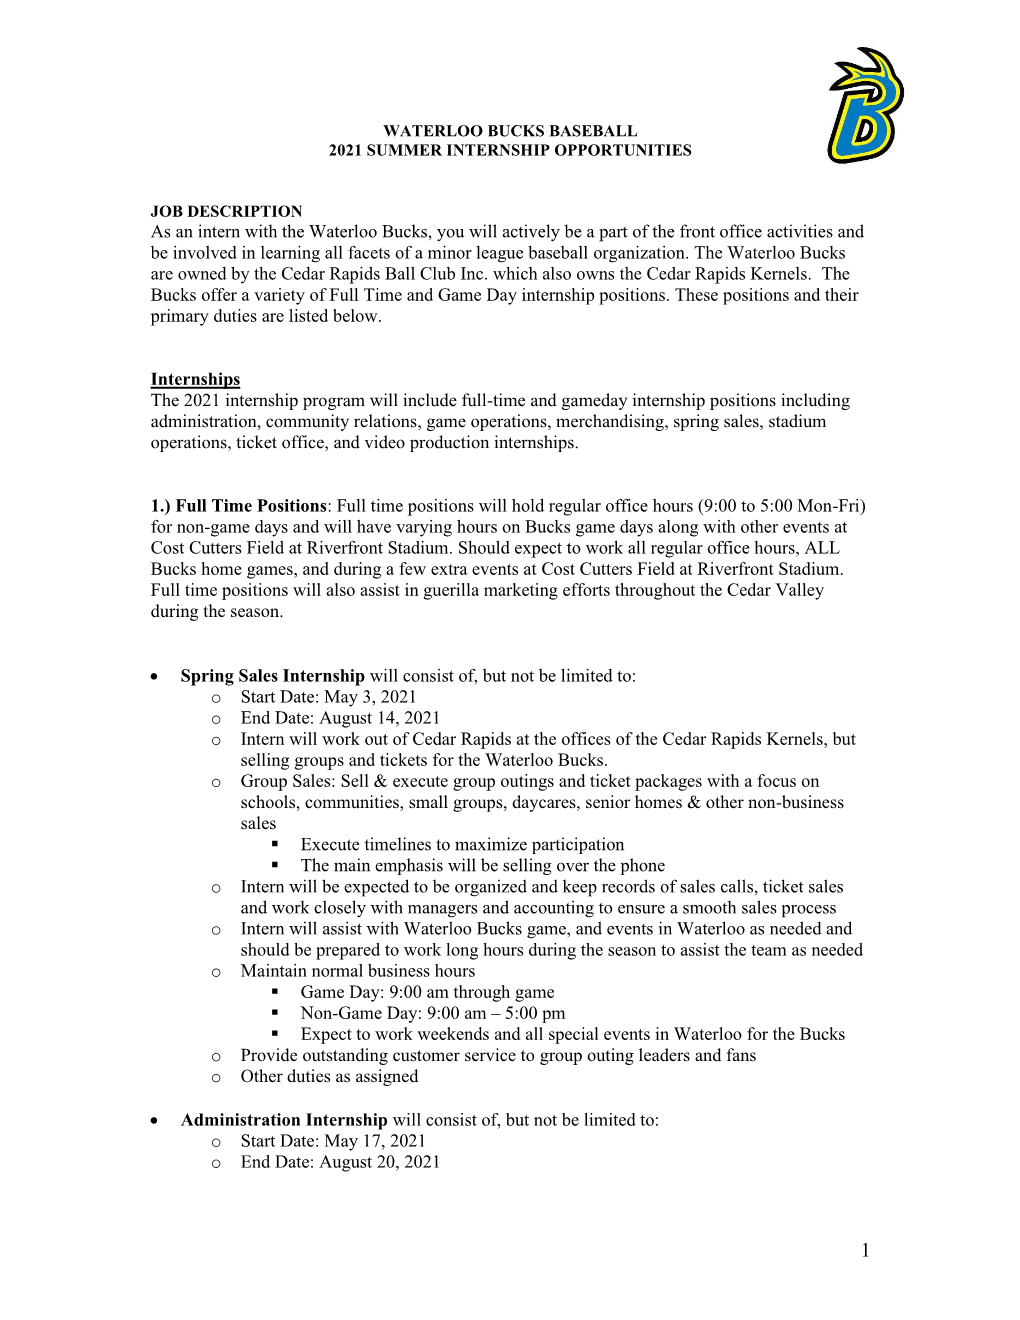 Waterloo Bucks Baseball 2021 Summer Internship Opportunities Job Description